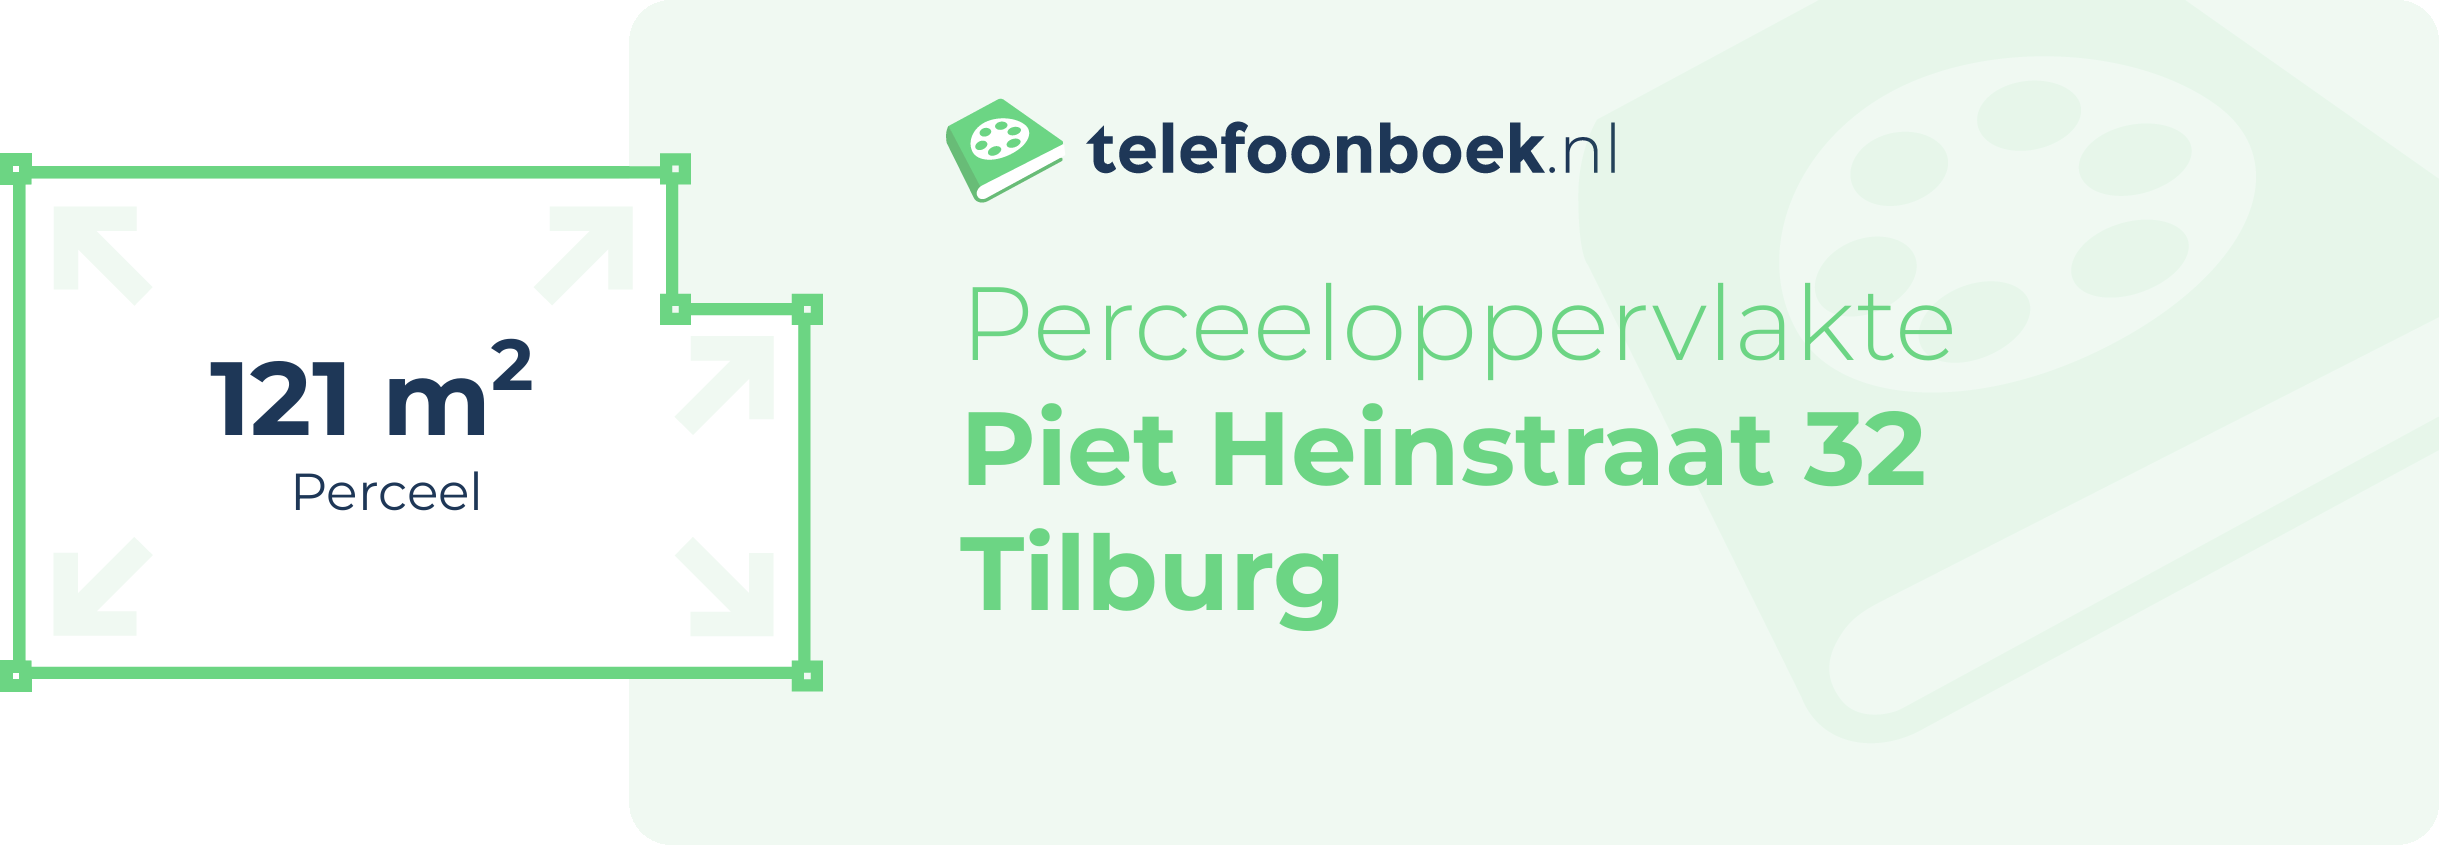 Perceeloppervlakte Piet Heinstraat 32 Tilburg